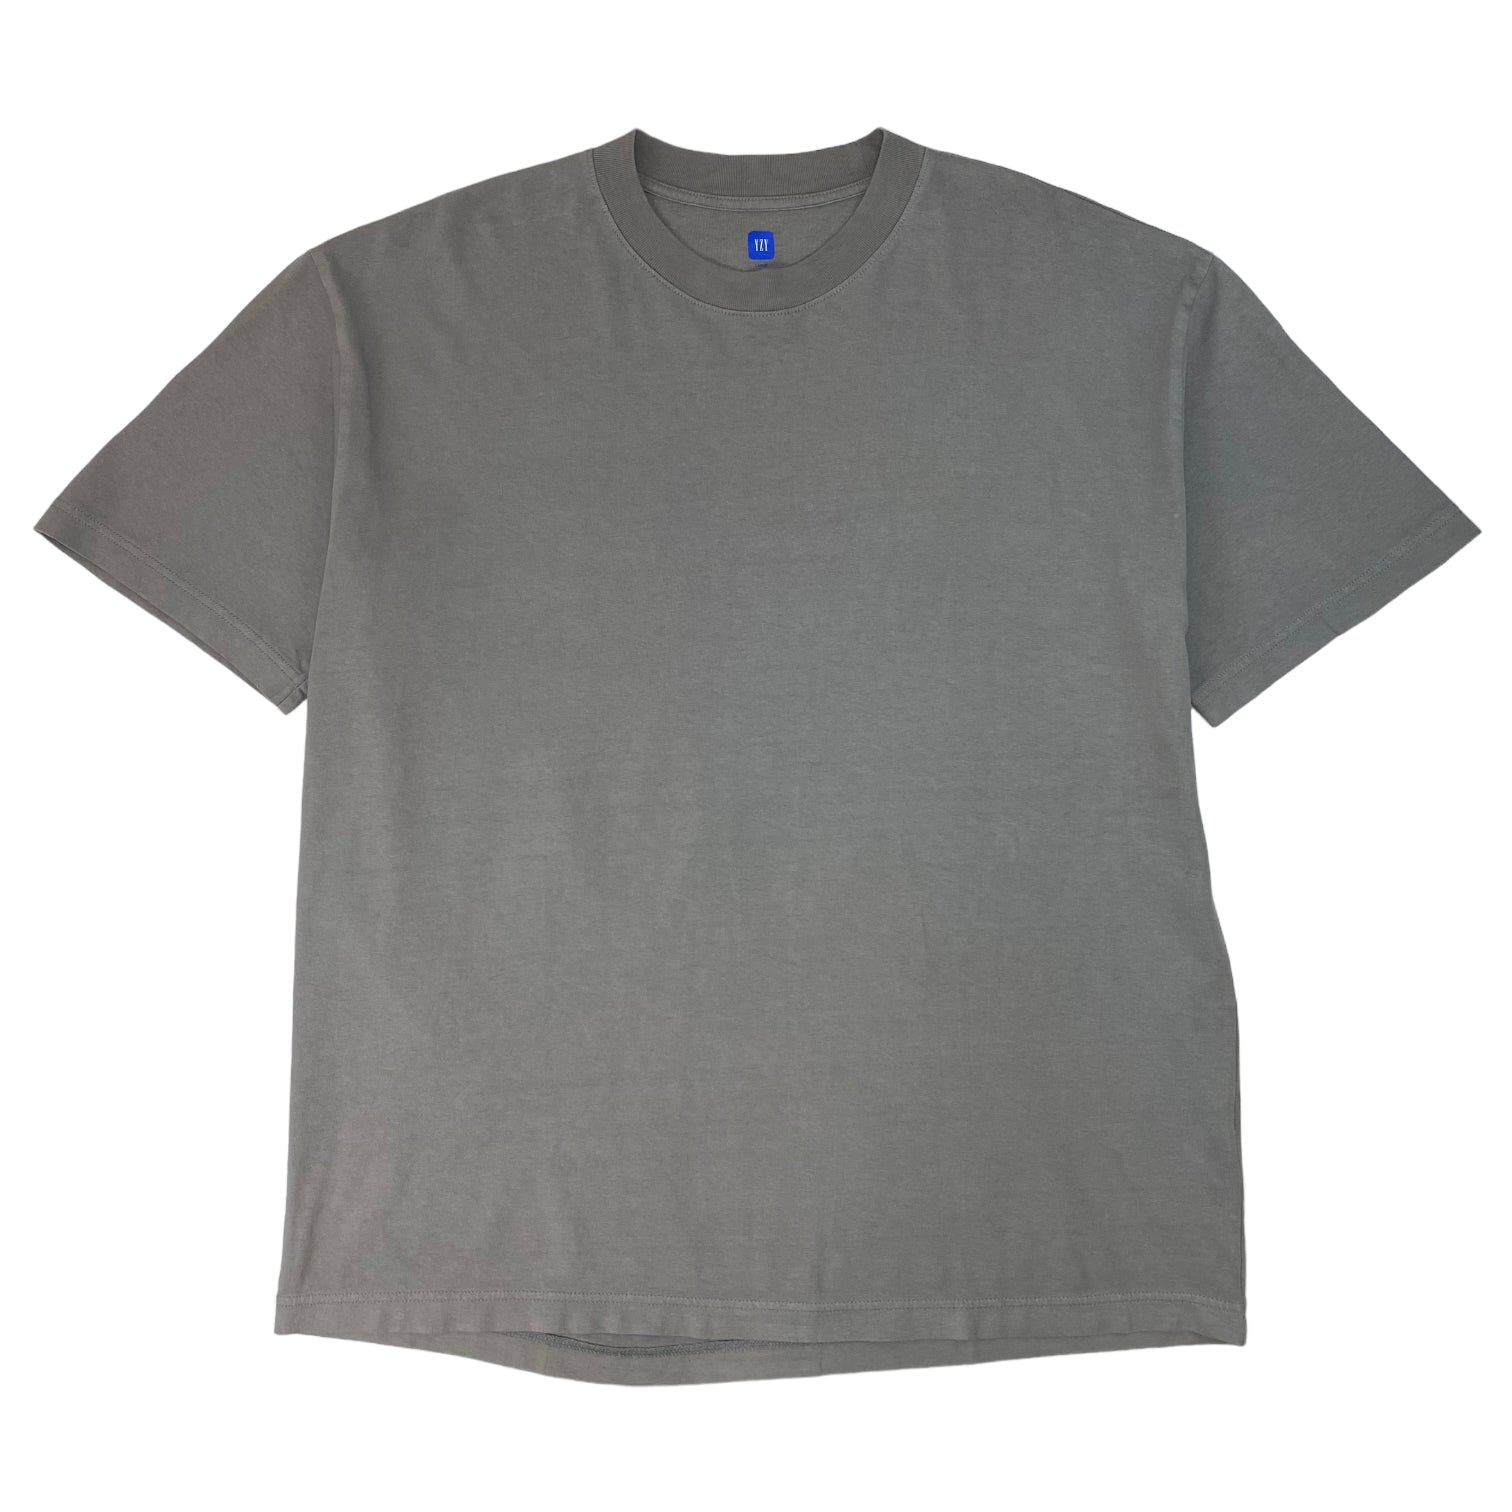 Yeezy x Gap Light Grey Unreleased Shirt - Light Grey Shirt